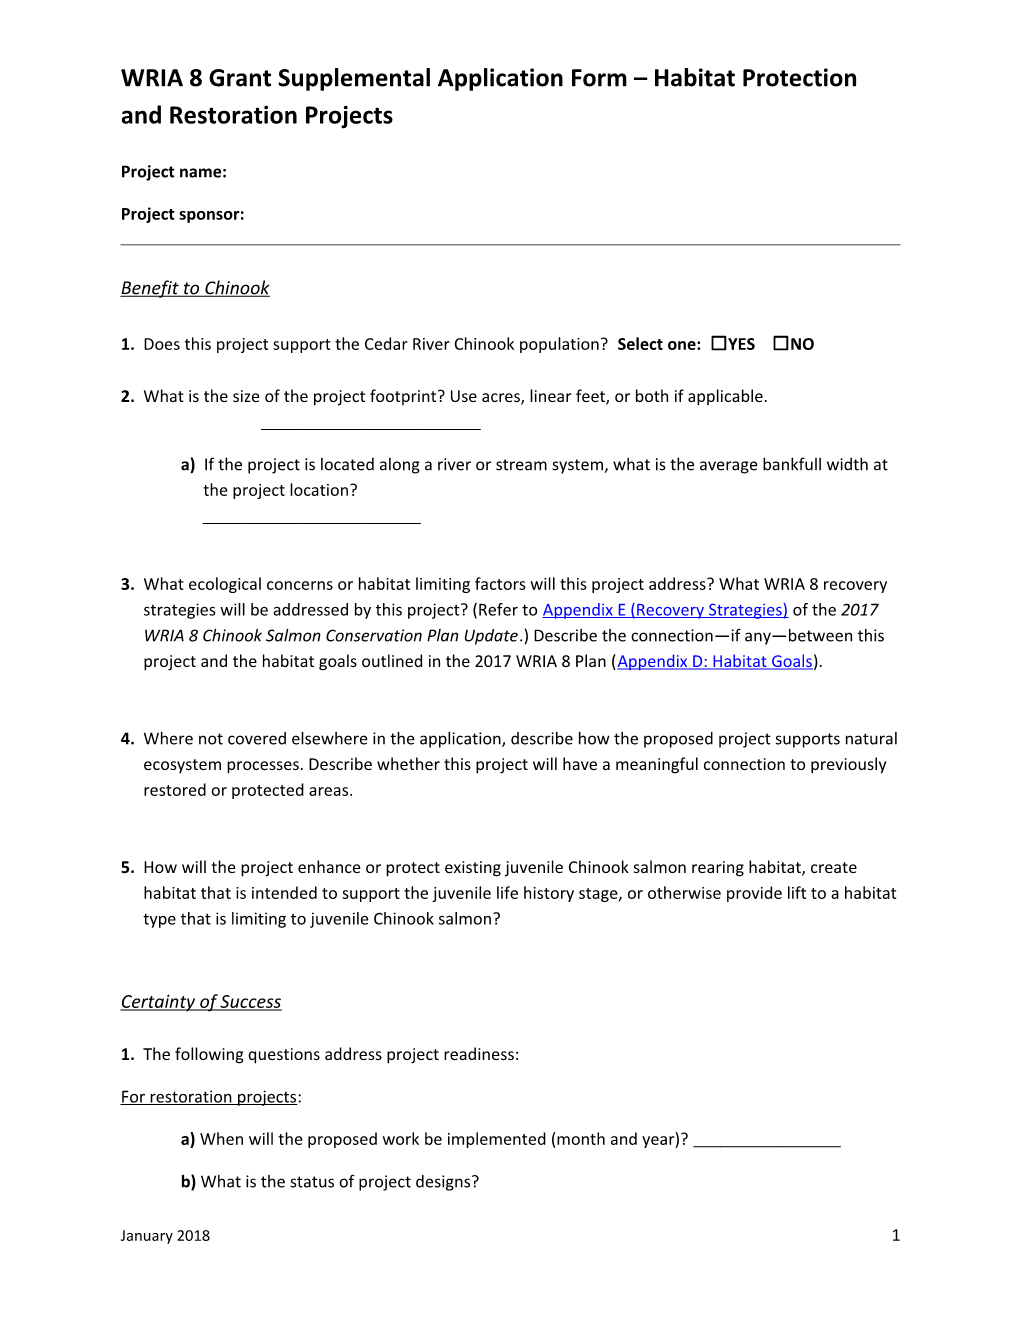 WRIA 8 Grant Application Supplemental Form